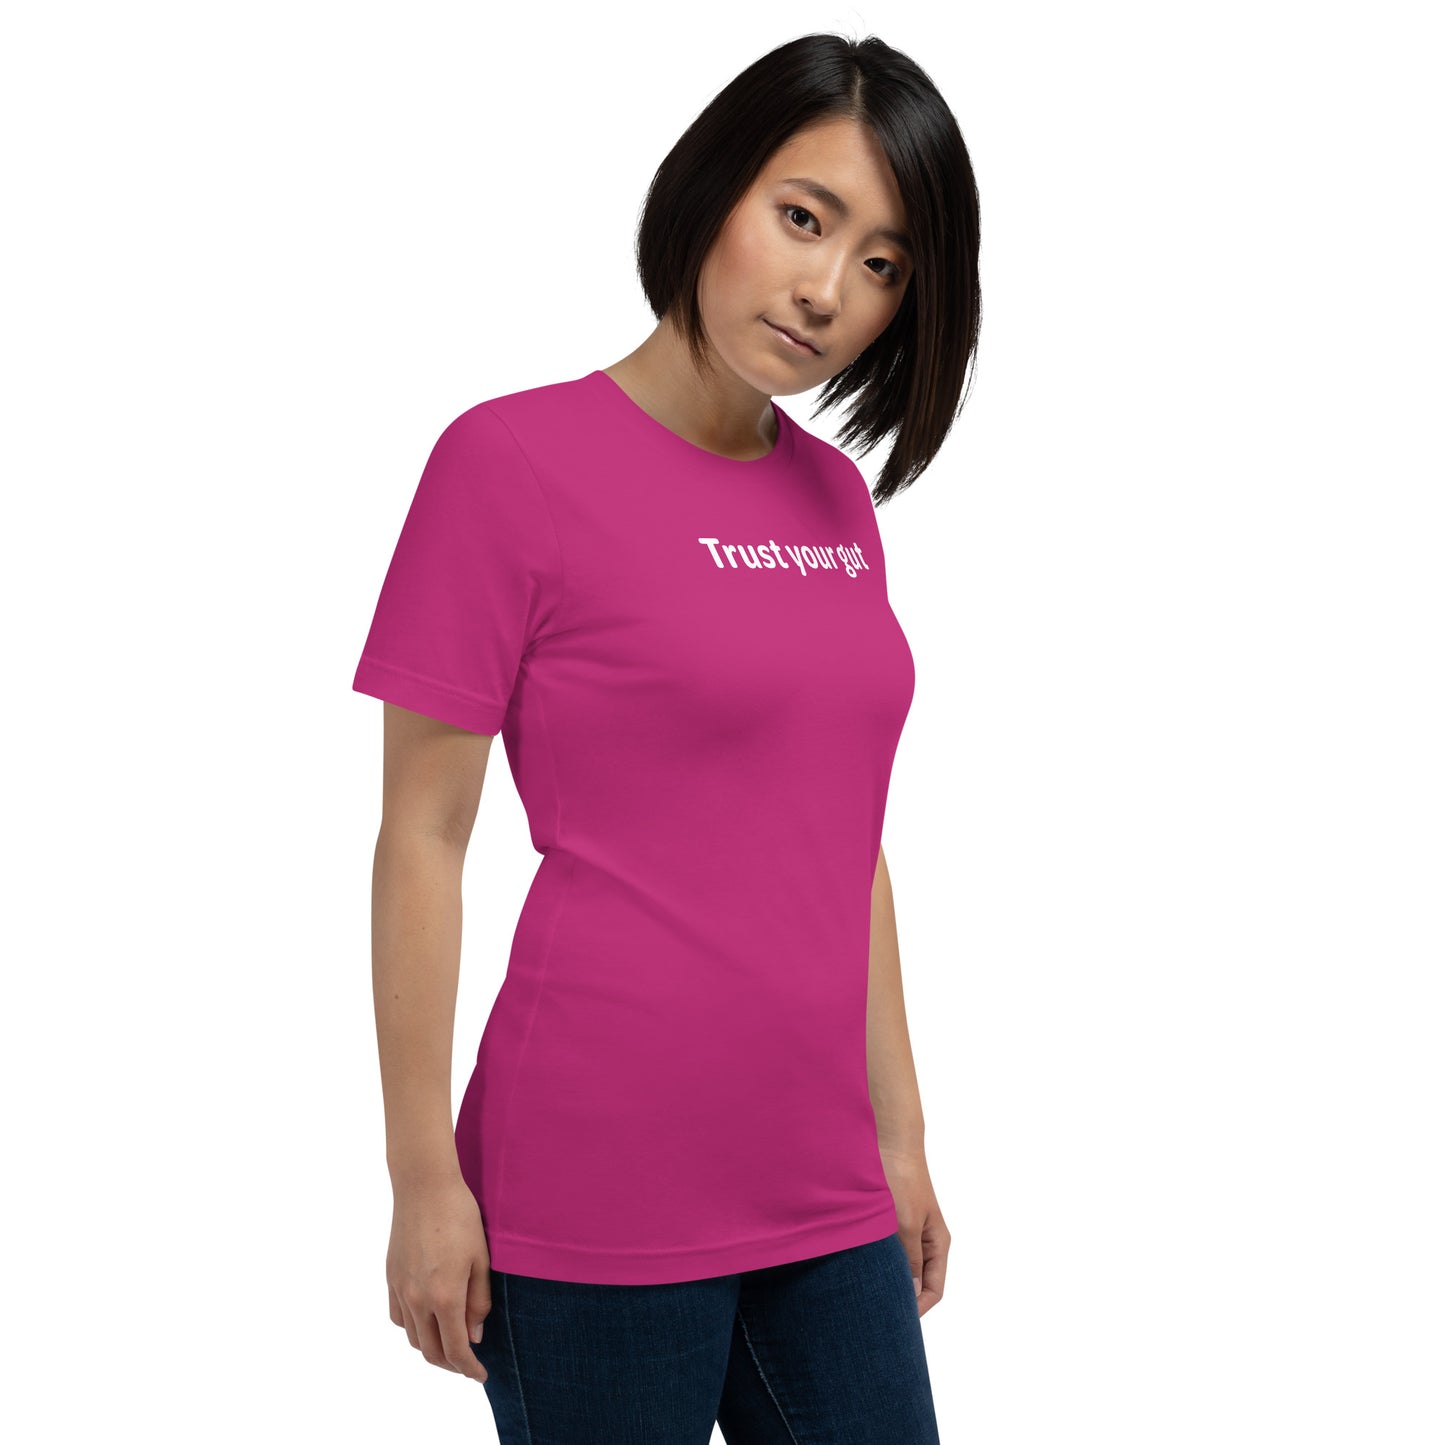 Trust your gut - White Text - Womens T-Shirt